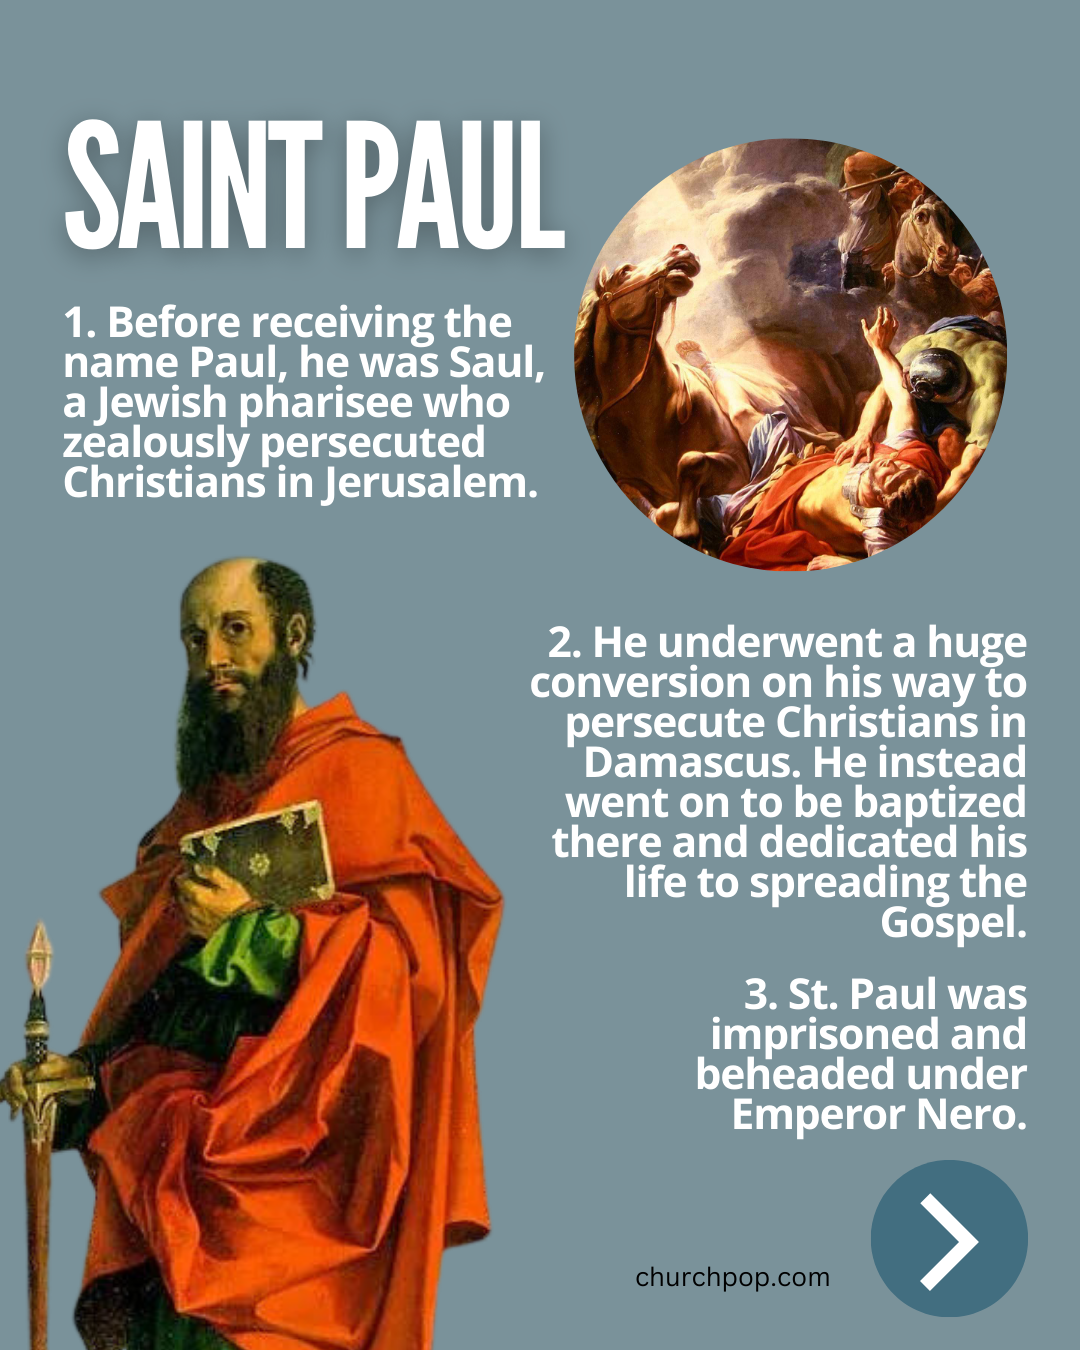 Who is saint Paul?